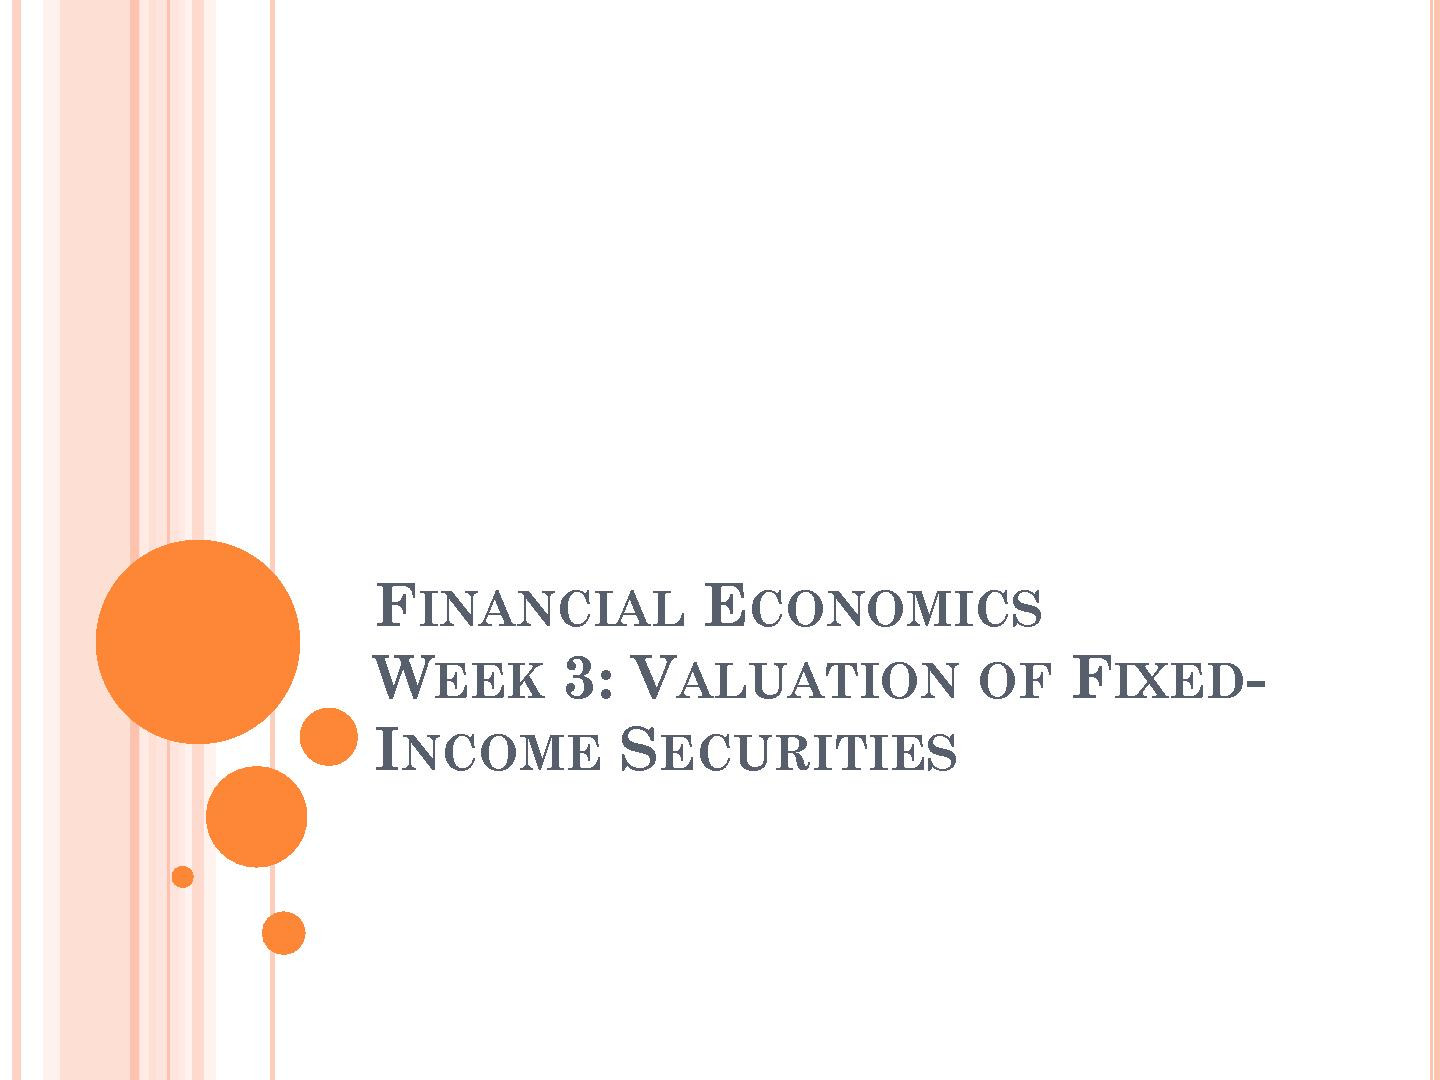 FINANCIAL ECONOMICS WEEK 3: VALUATION OF FIXEDINCOME SECURITIES